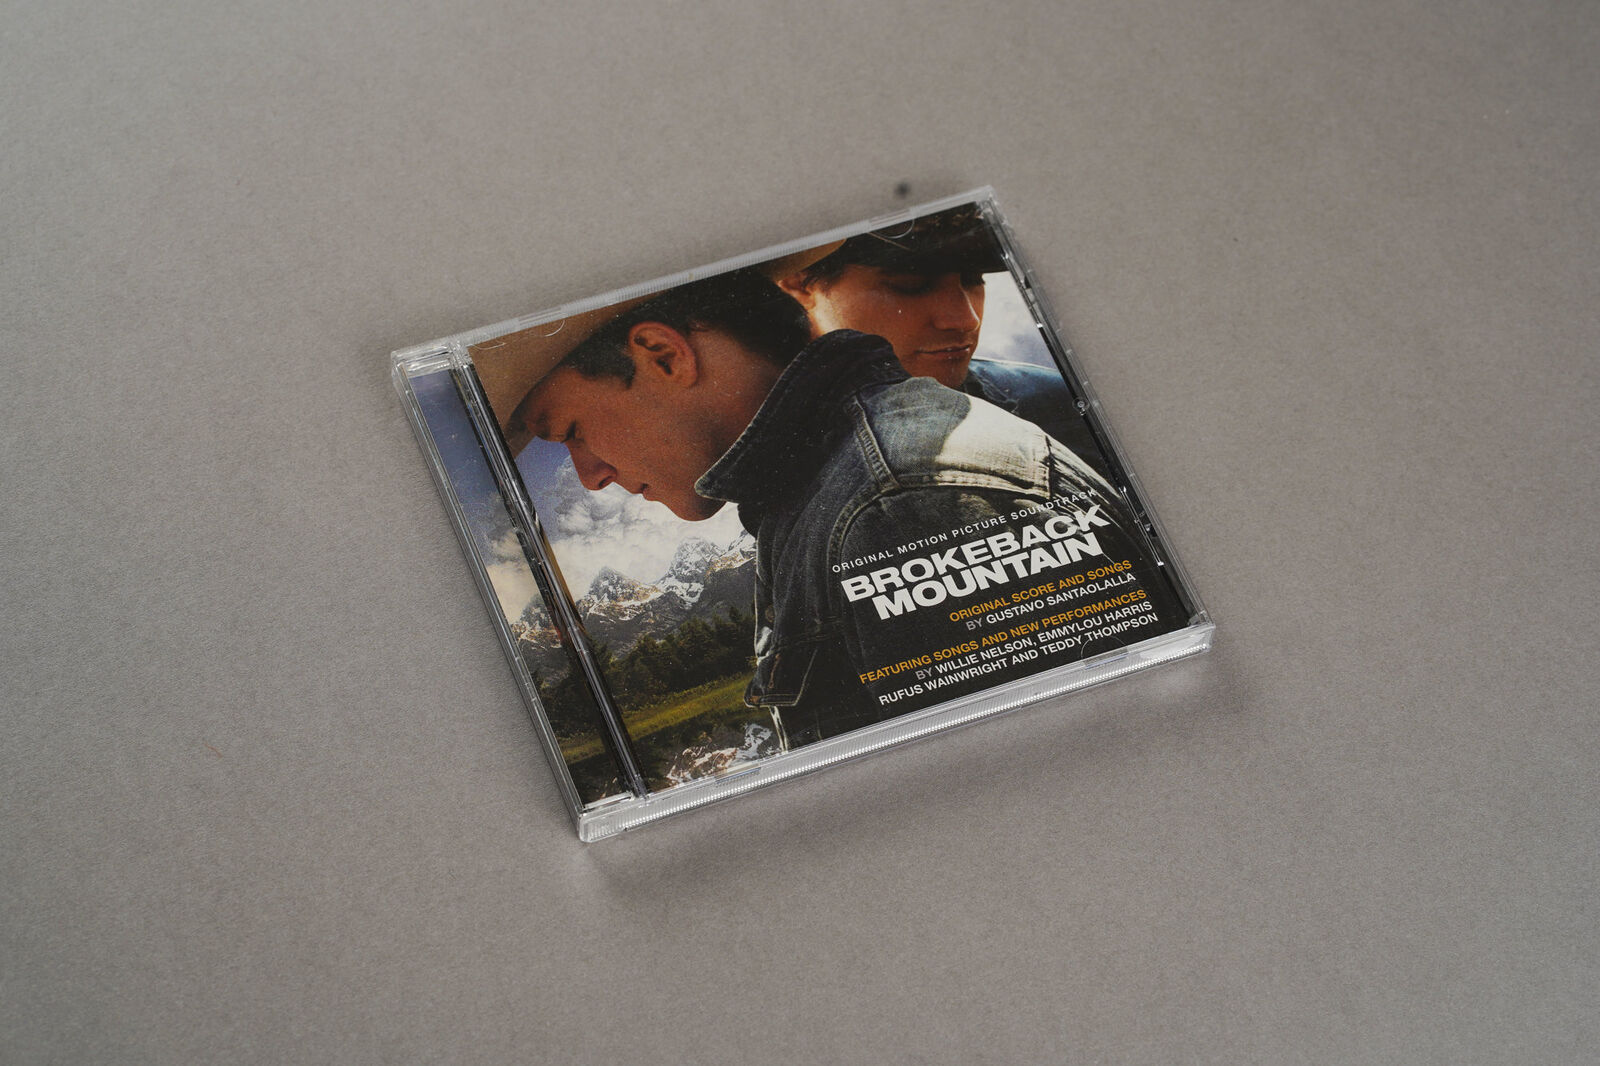 Brokeback Mountain - Original Soundtrack 2005 CD Compact Disc Album